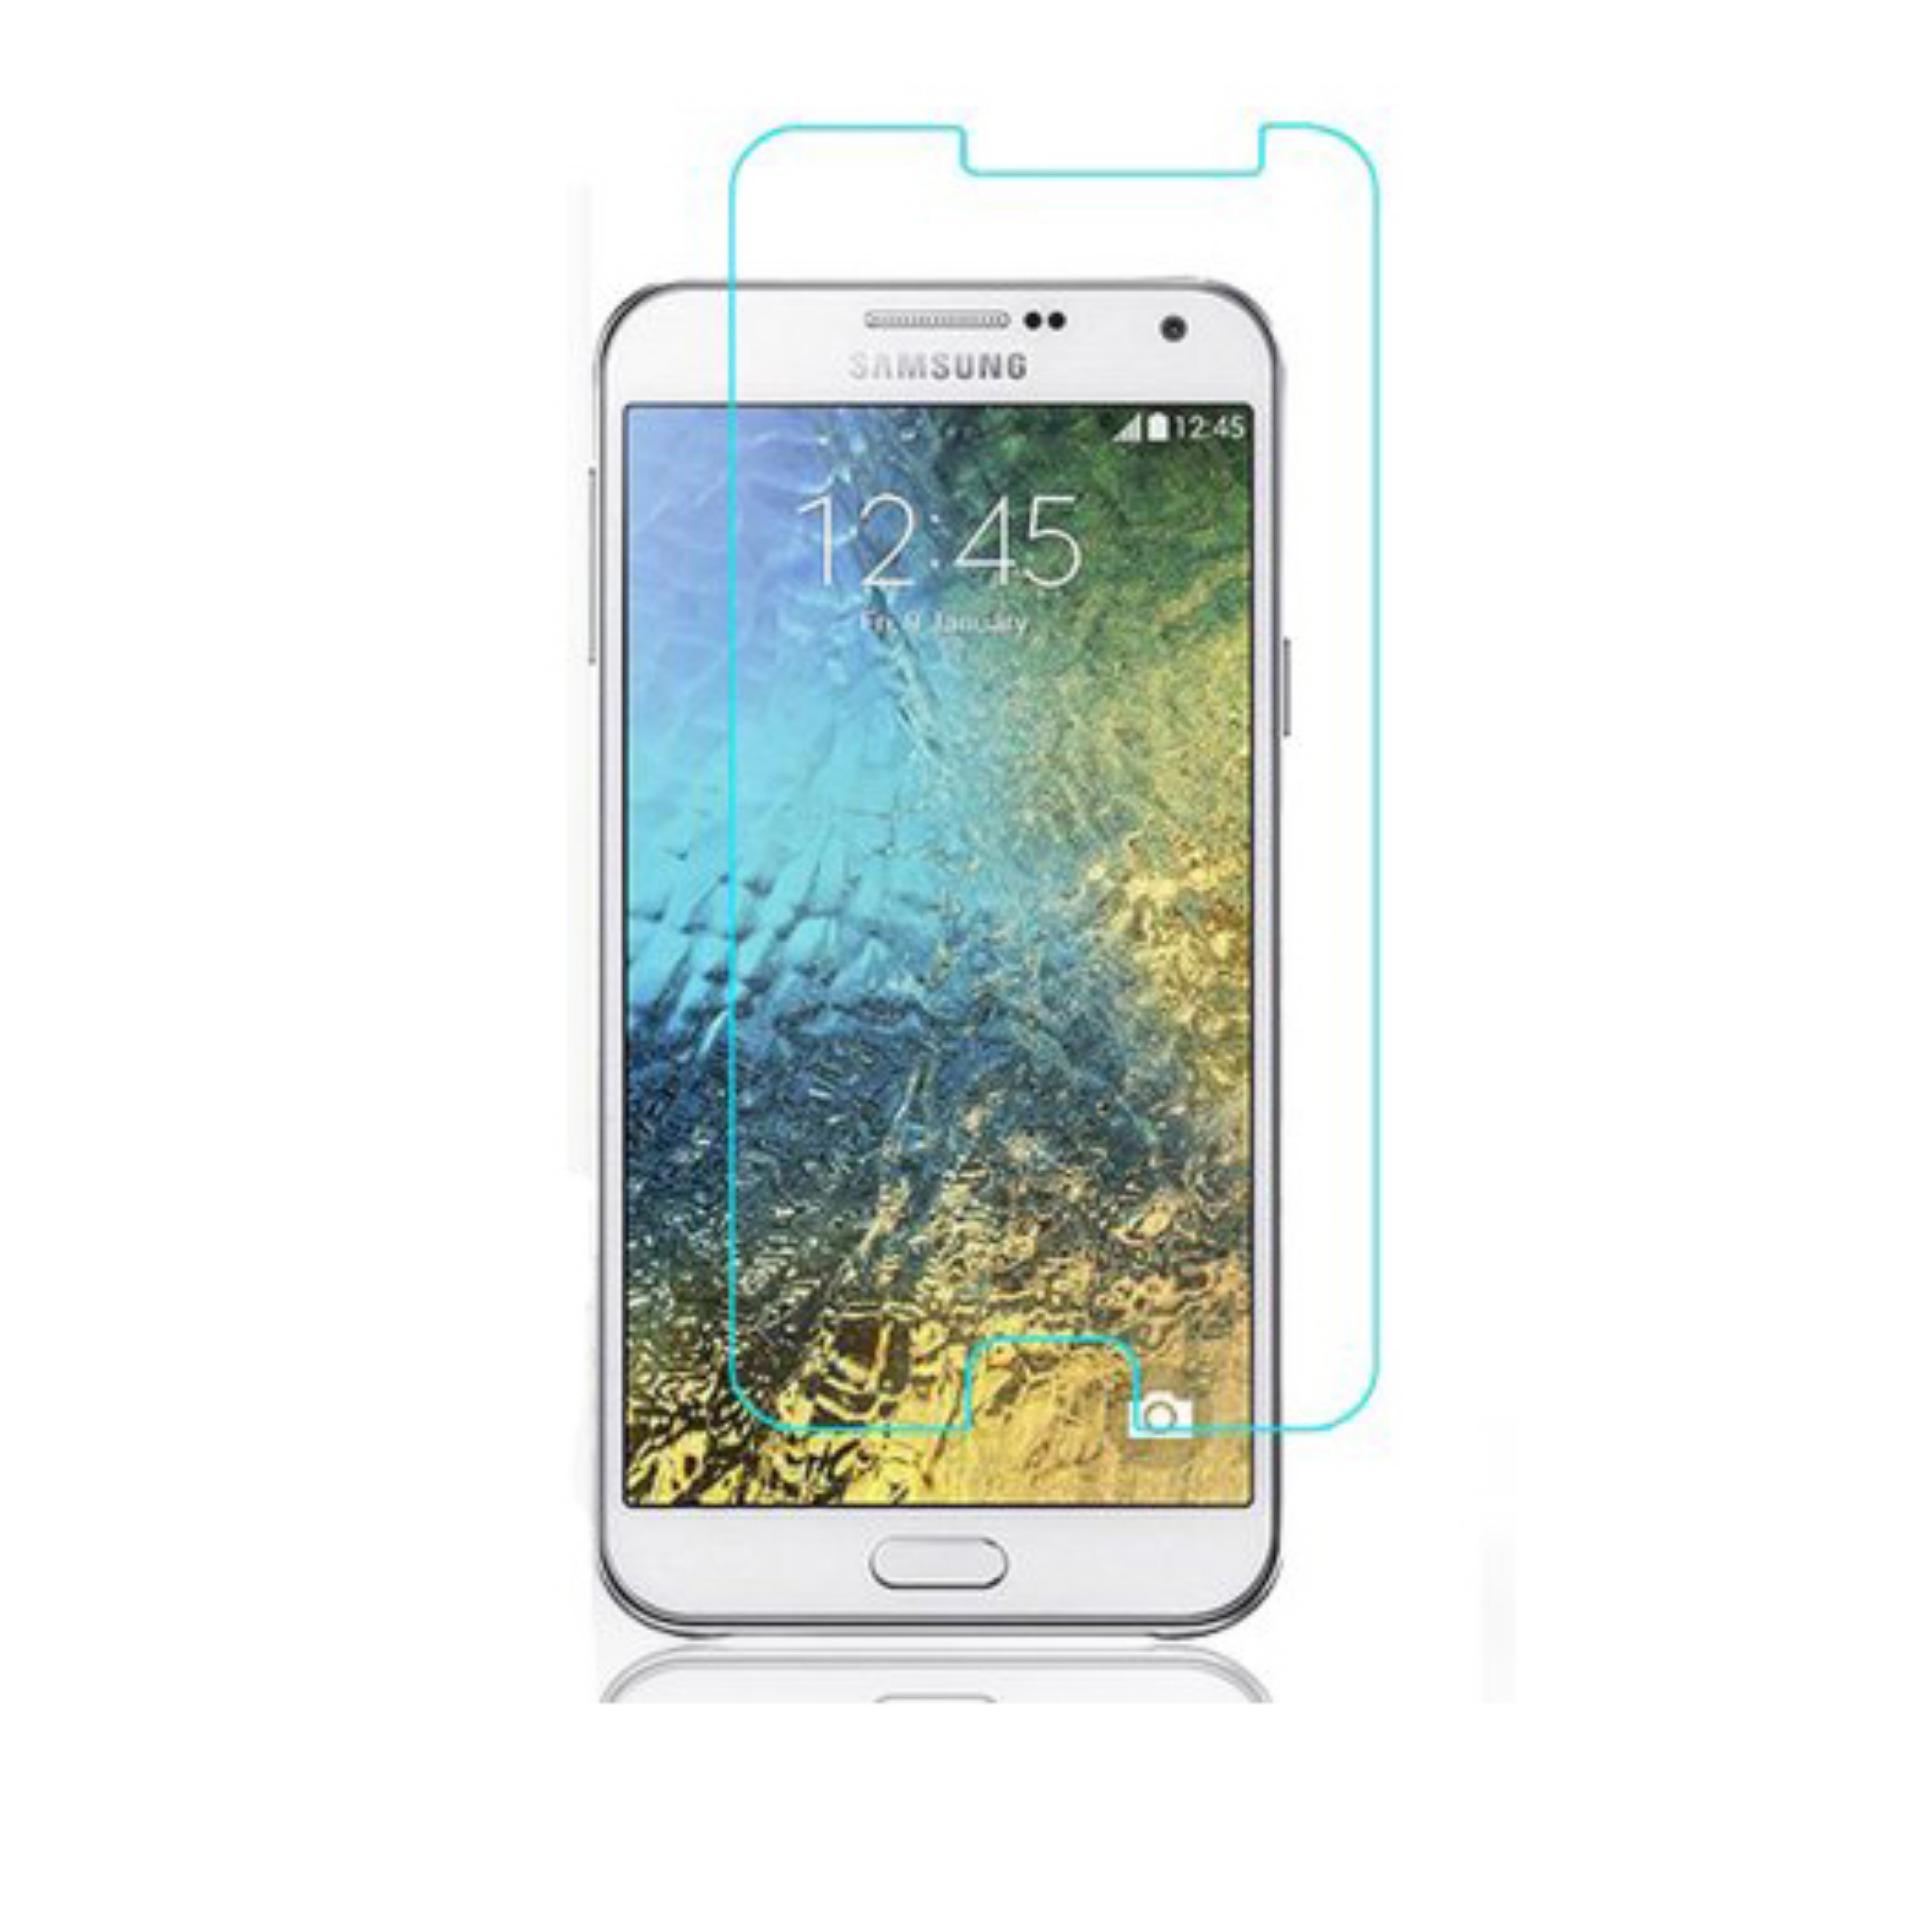 Vn Samsung Galaxy J7 (2015) / J700 / 4G LTE / Duos Tempered Glass 9H Screen Protector 0.32mm - Anti Crash Film - Bening Transparan